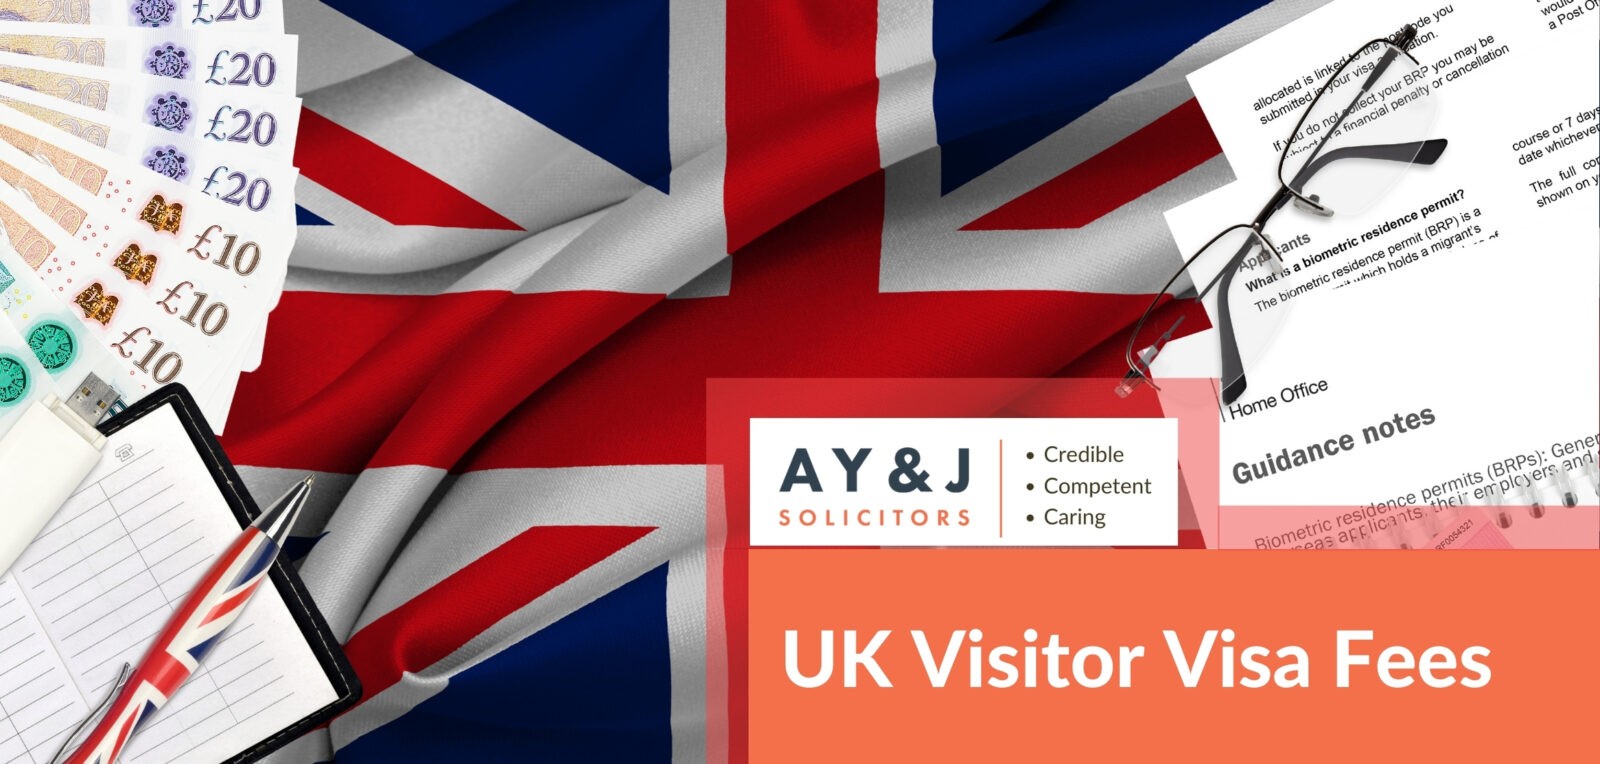 UK Visitor Visa Fees & Requirements 